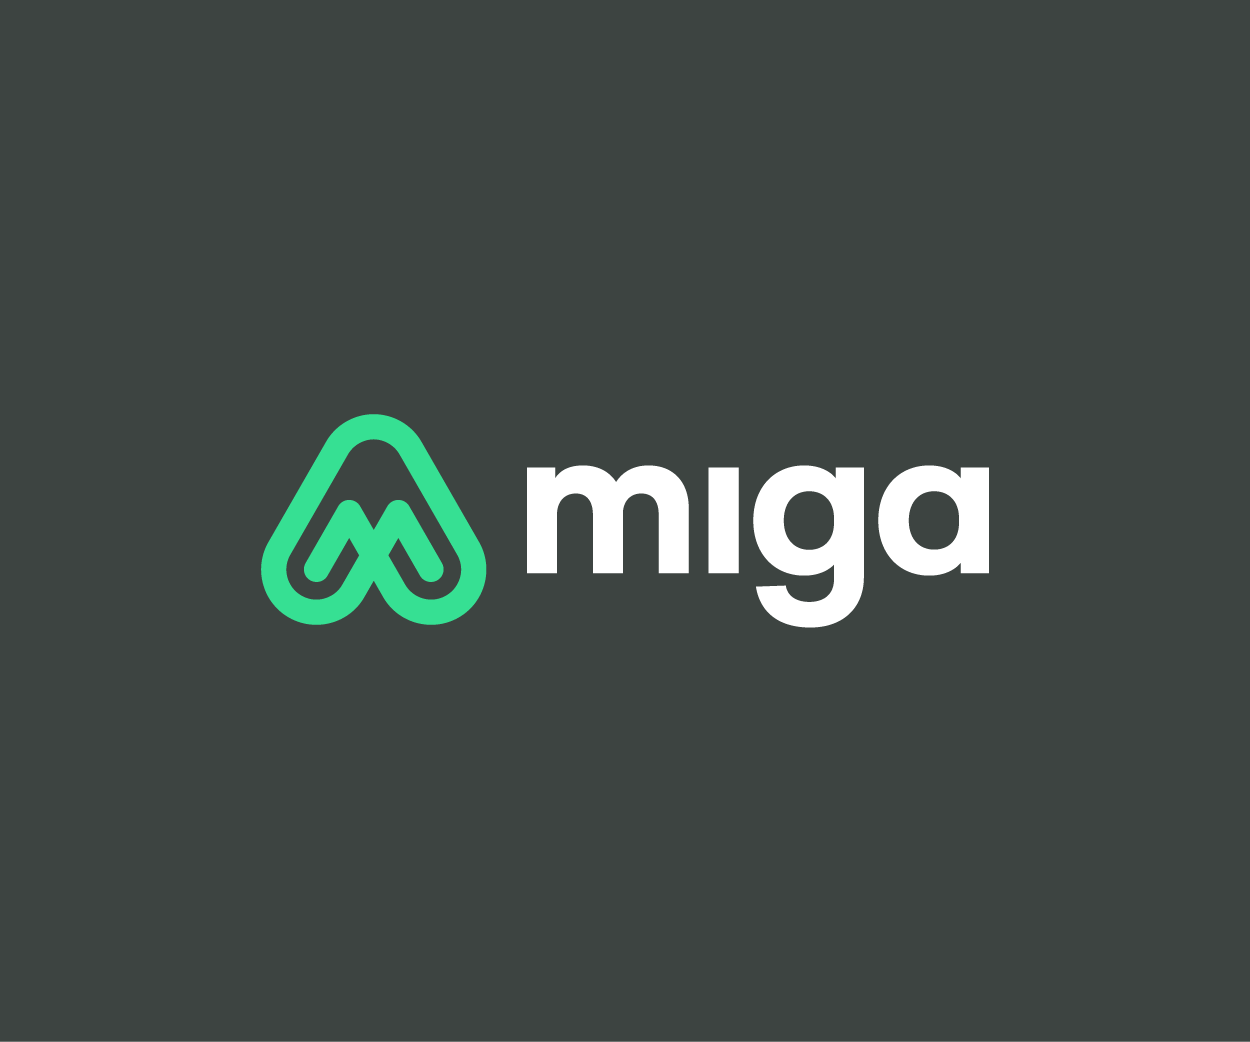 Miga - Marketing & communication firm for the digital today Logo Design Image